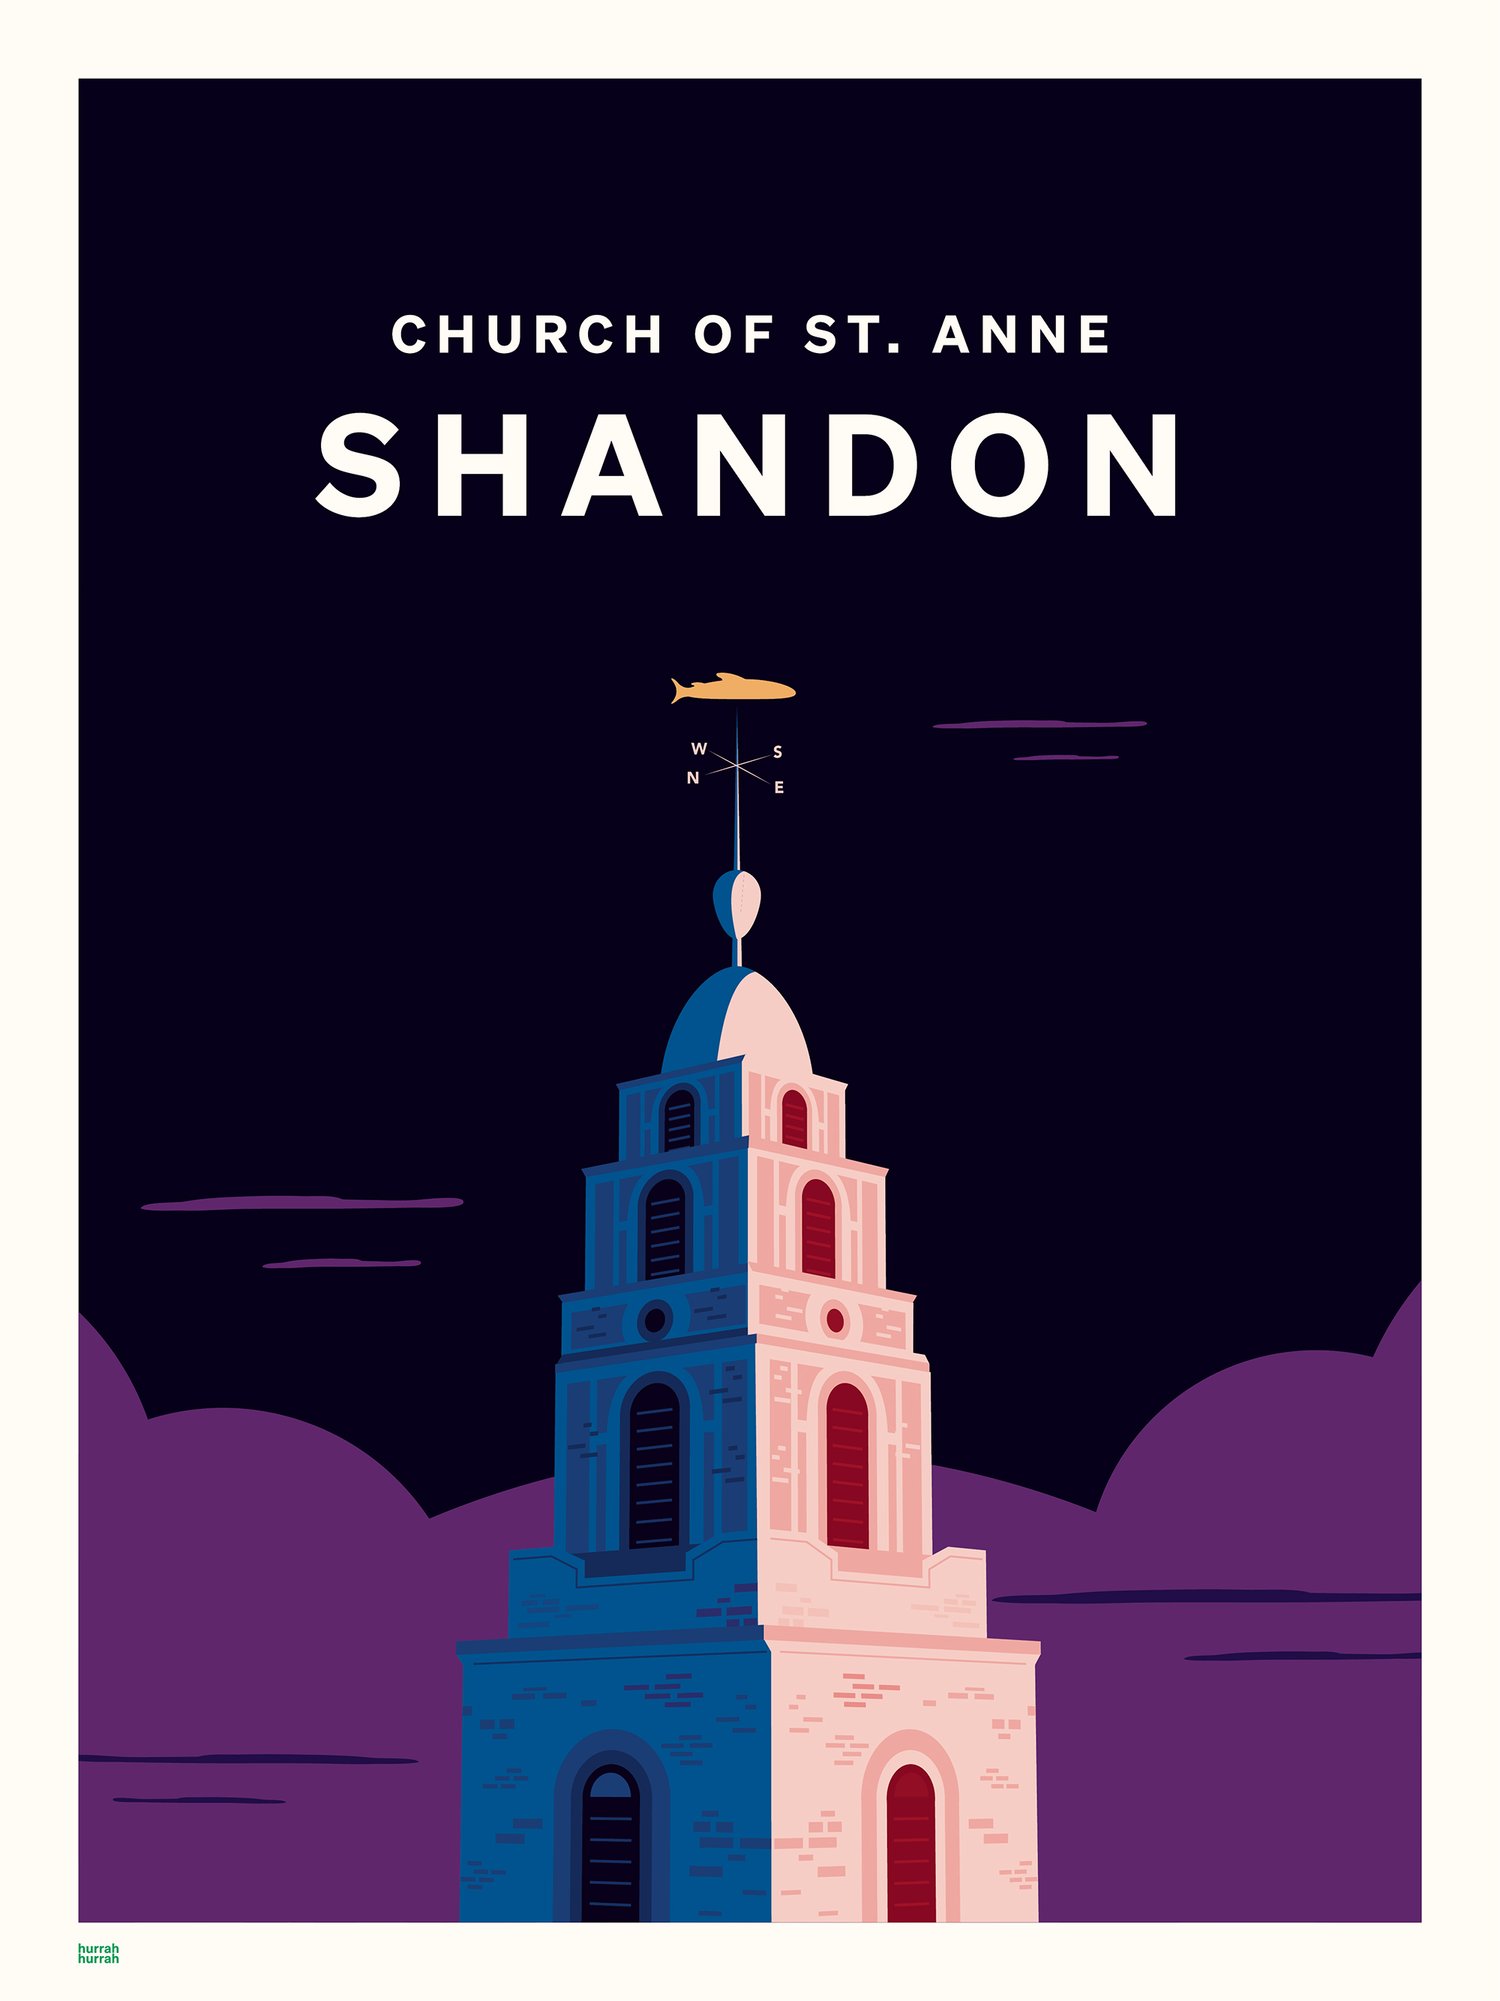 St. Anne's Shandon